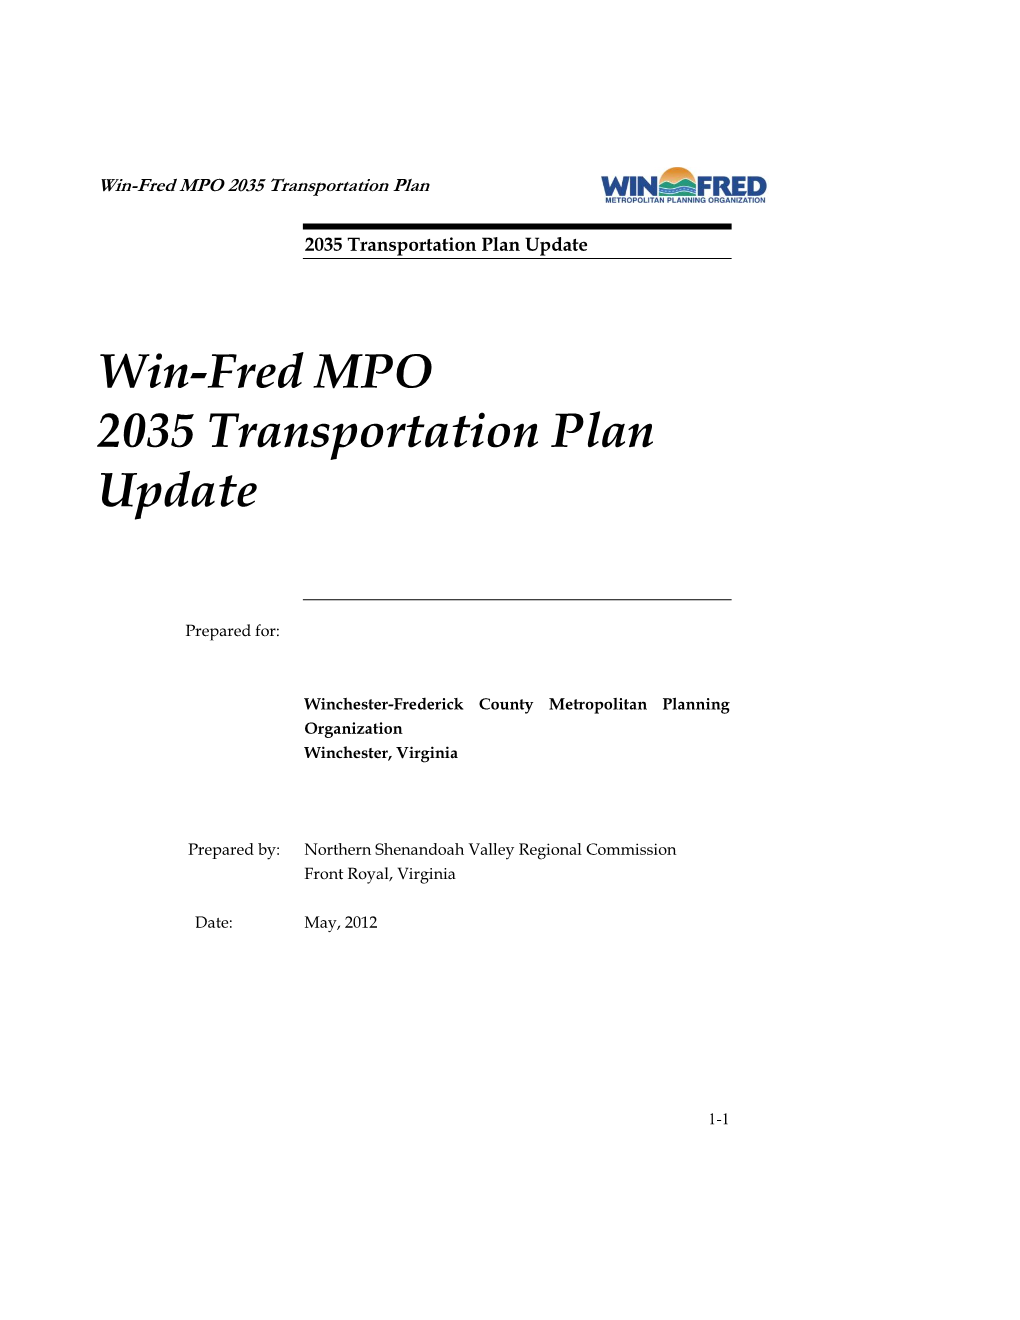 Win-Fred MPO 2035 Transportation Plan Update